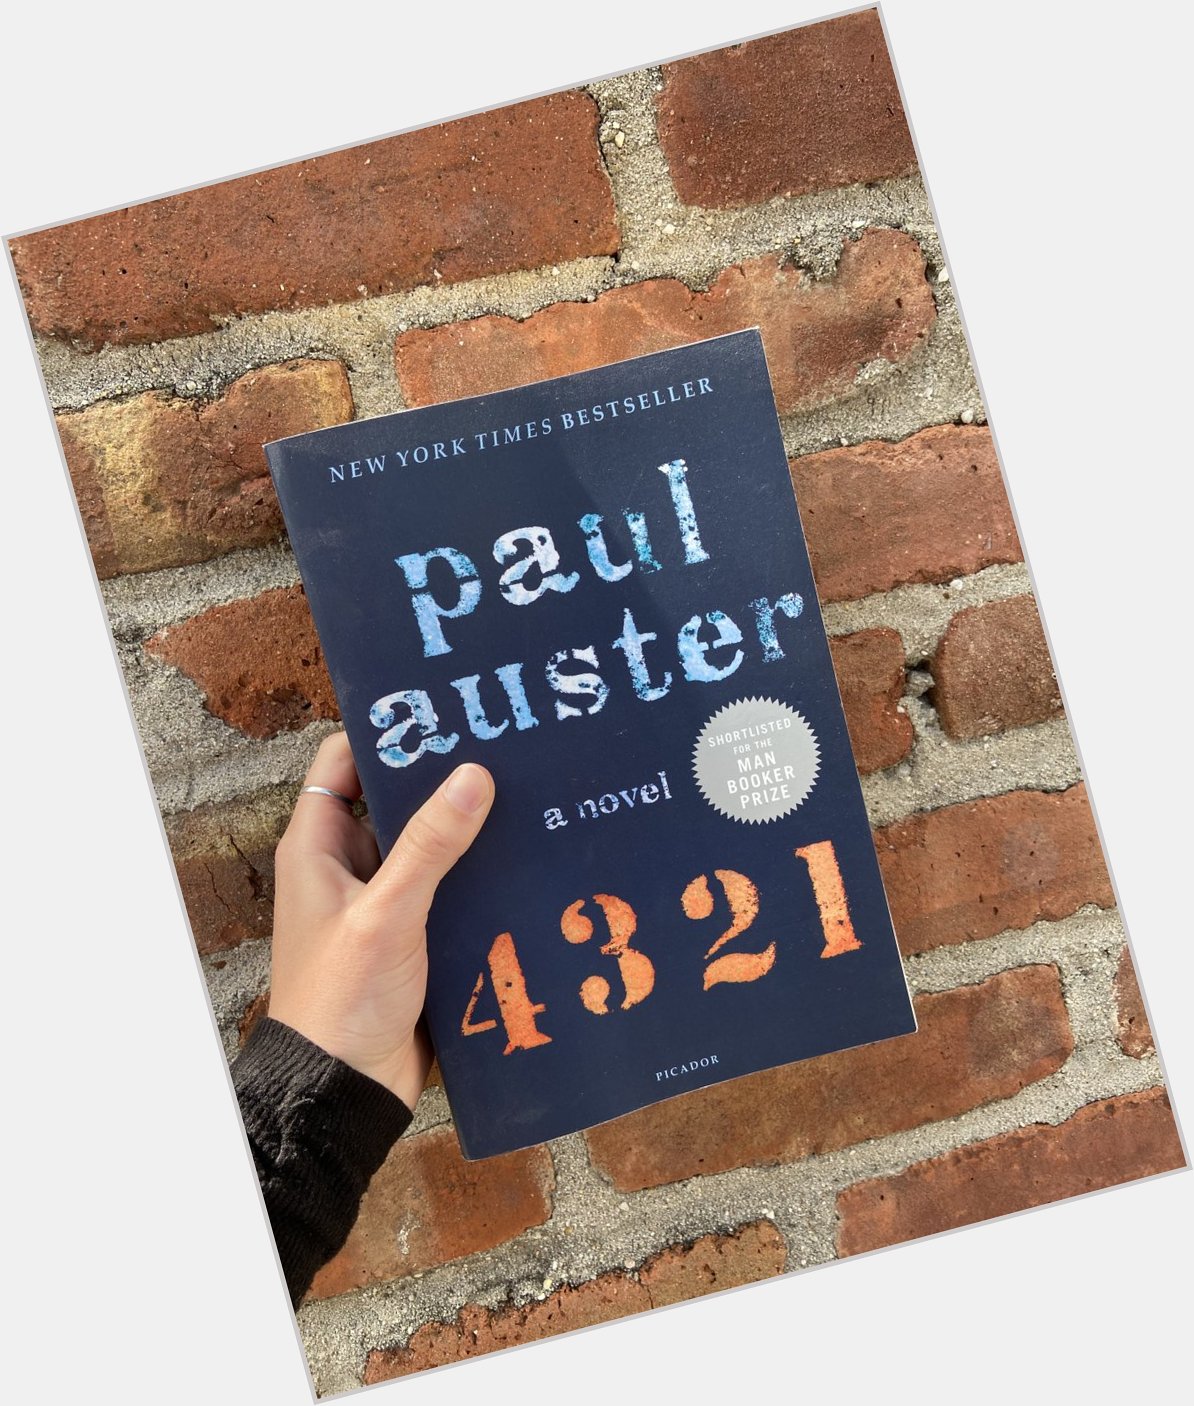 Happy birthday to Paul Auster!!  